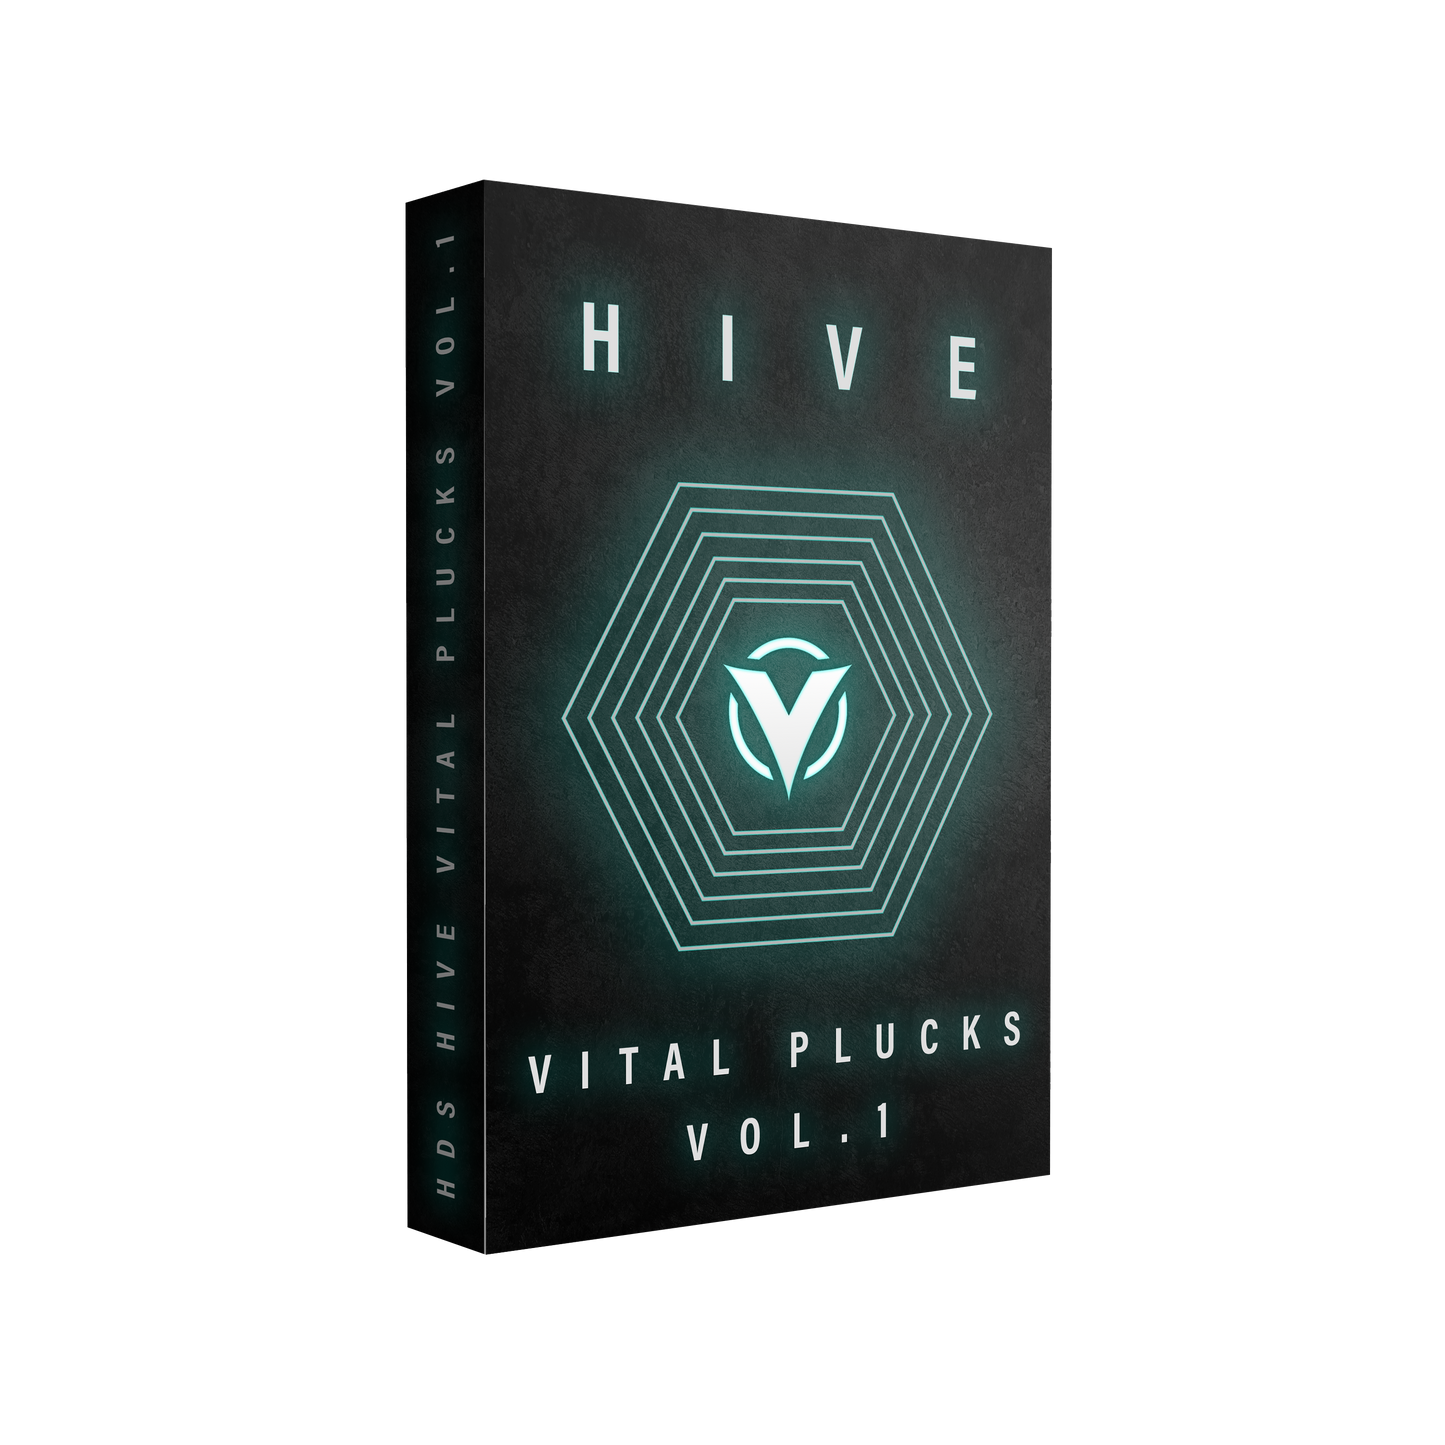 Hive Vital Plucks Vol.1